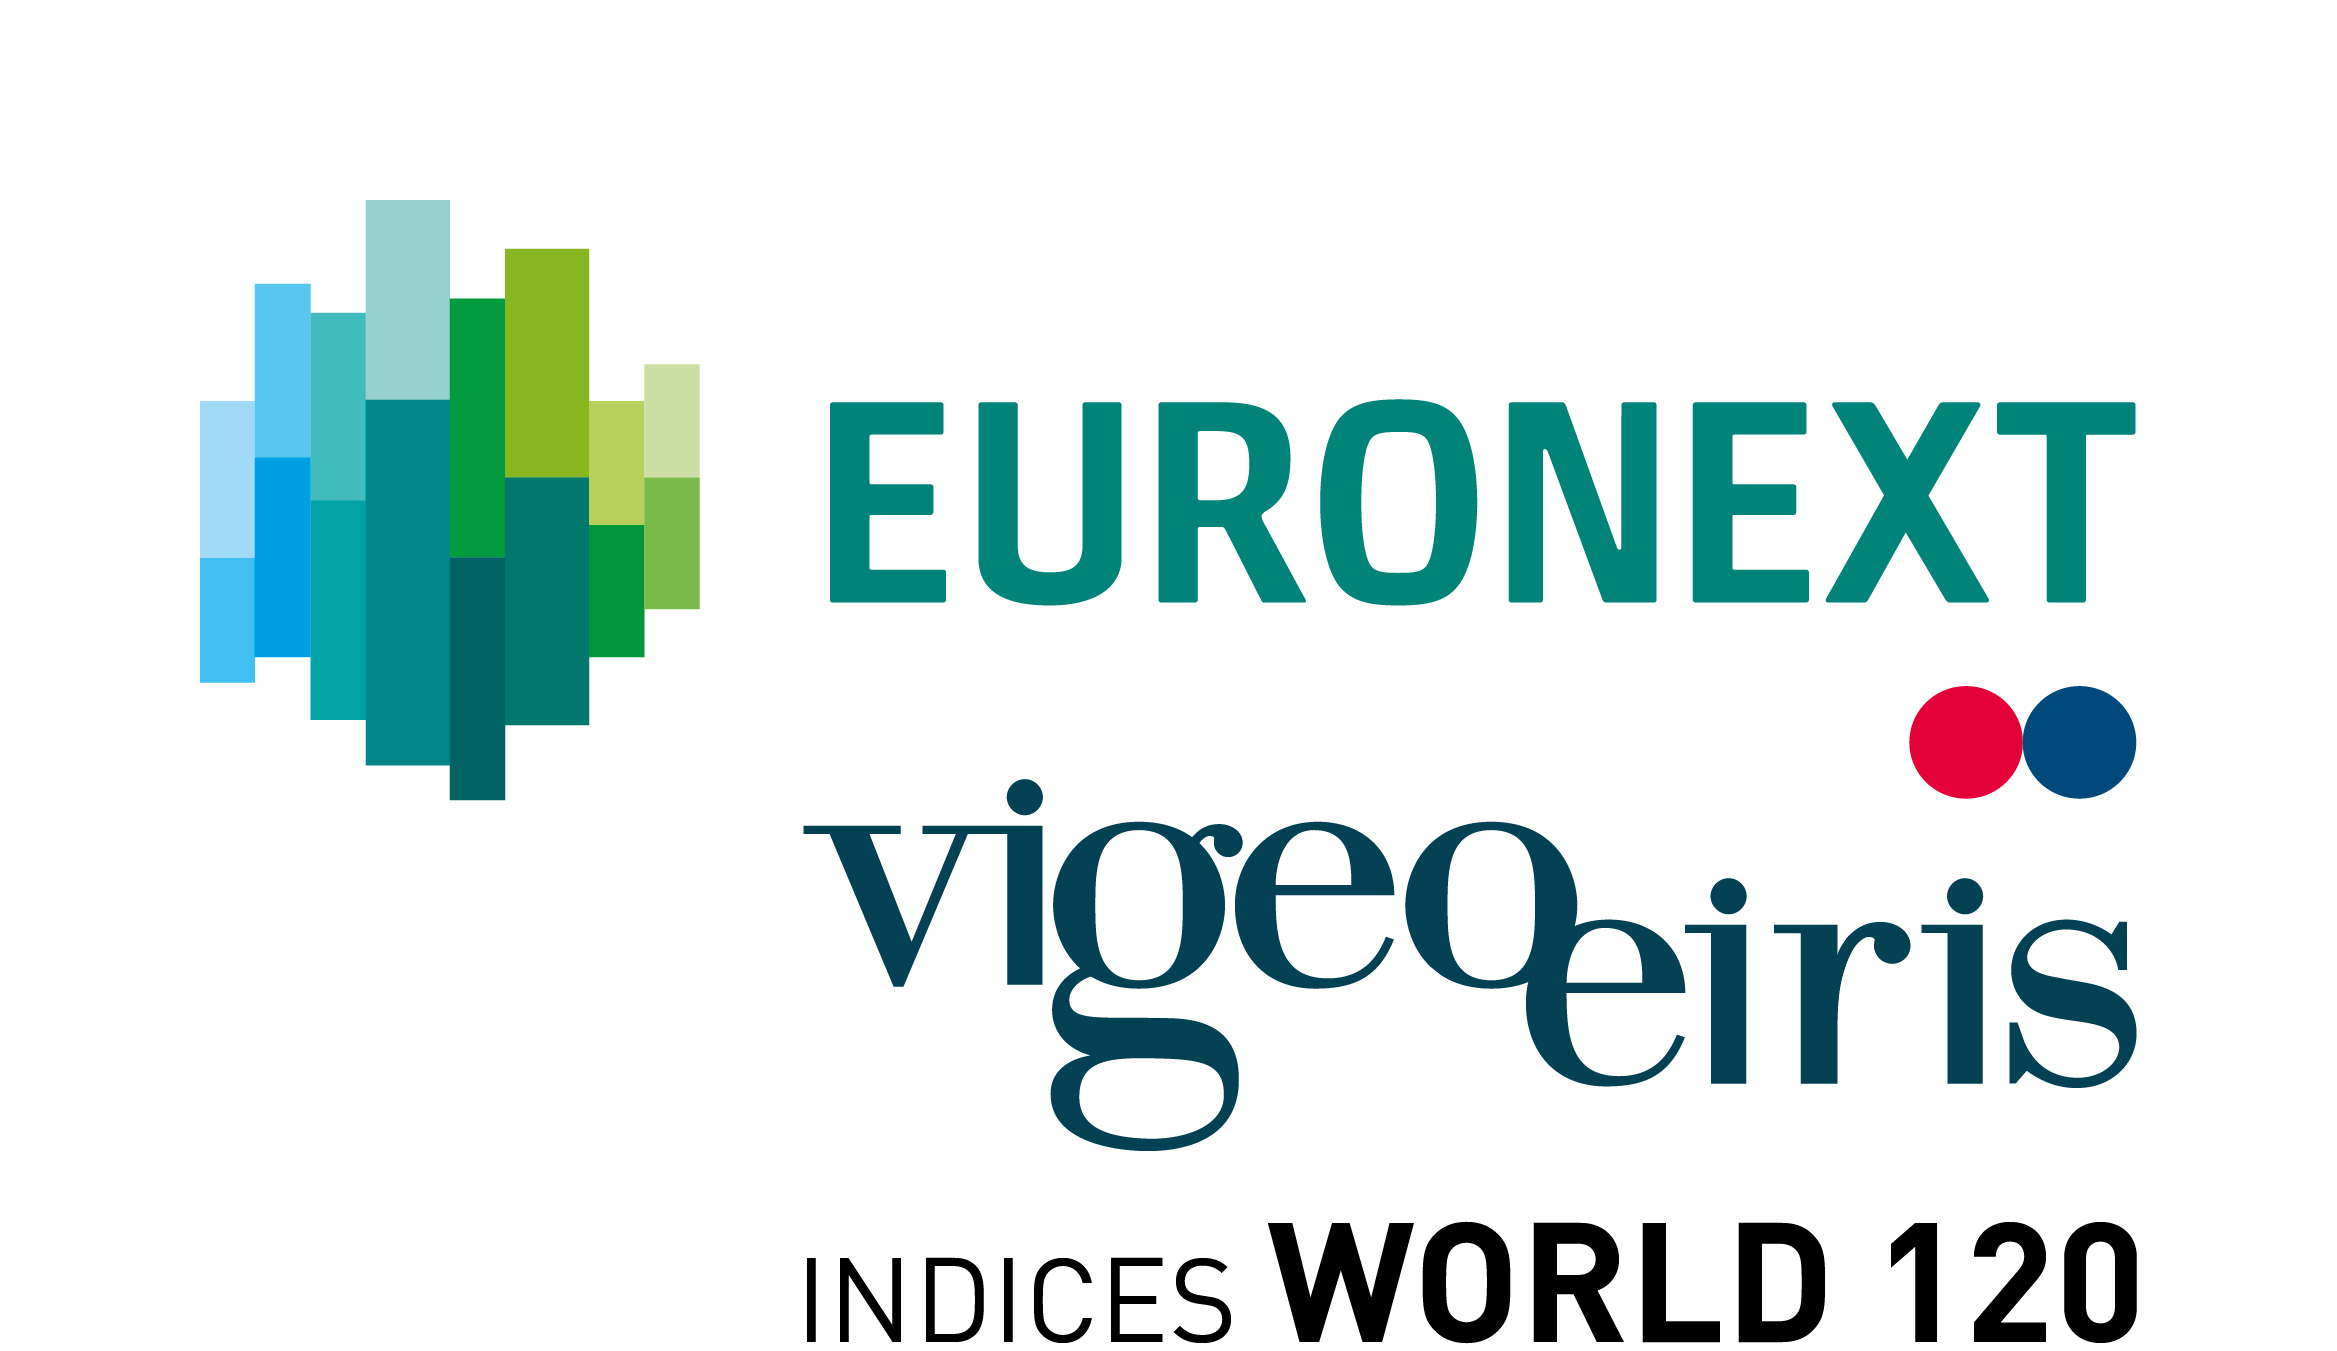 Euronext Vigeo Index World 120